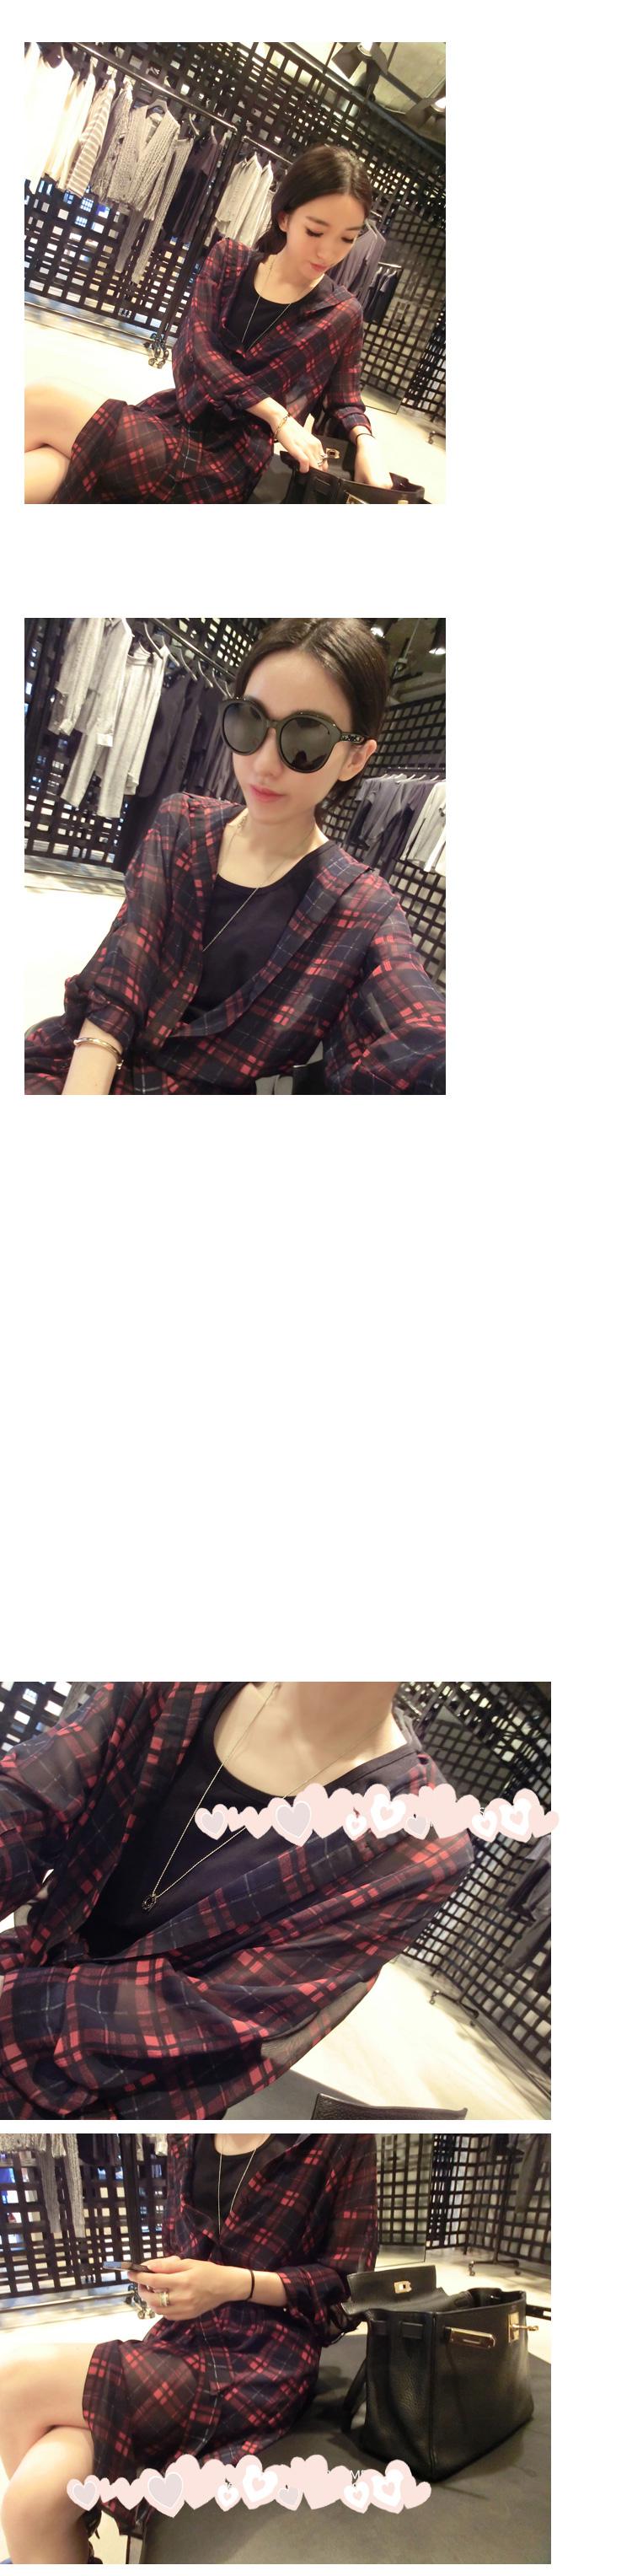 Mssefn 2014秋冬新款 薄款格子雪纺衬衫 中长款长袖衬衫 防晒衫8303-B141